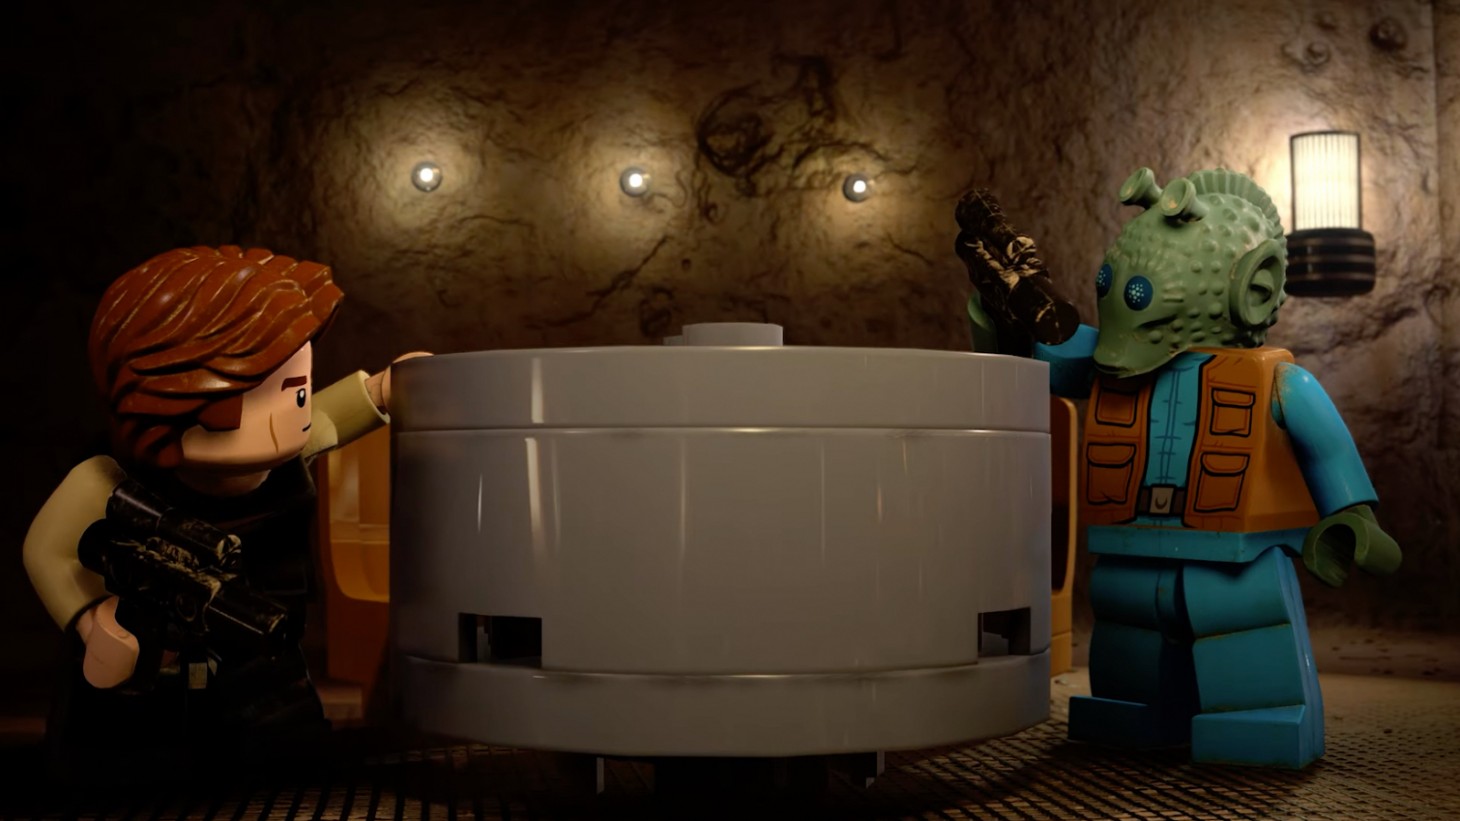 LEGO Star Wars Announces Obi-Wan Kenobi Expansion for Skywalker Saga